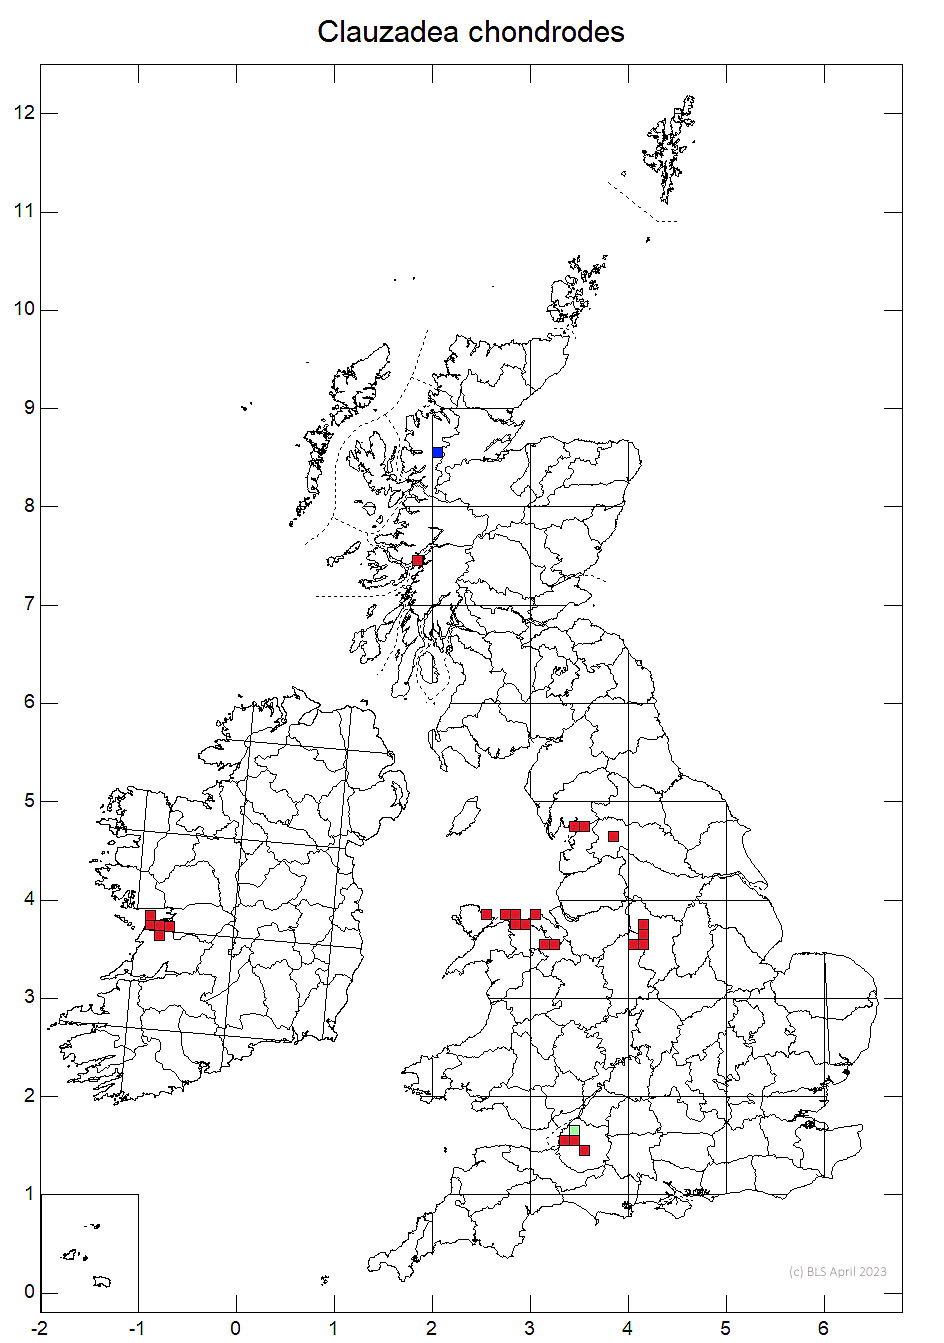 Clauzadea chondrodes 10km sq distribution map